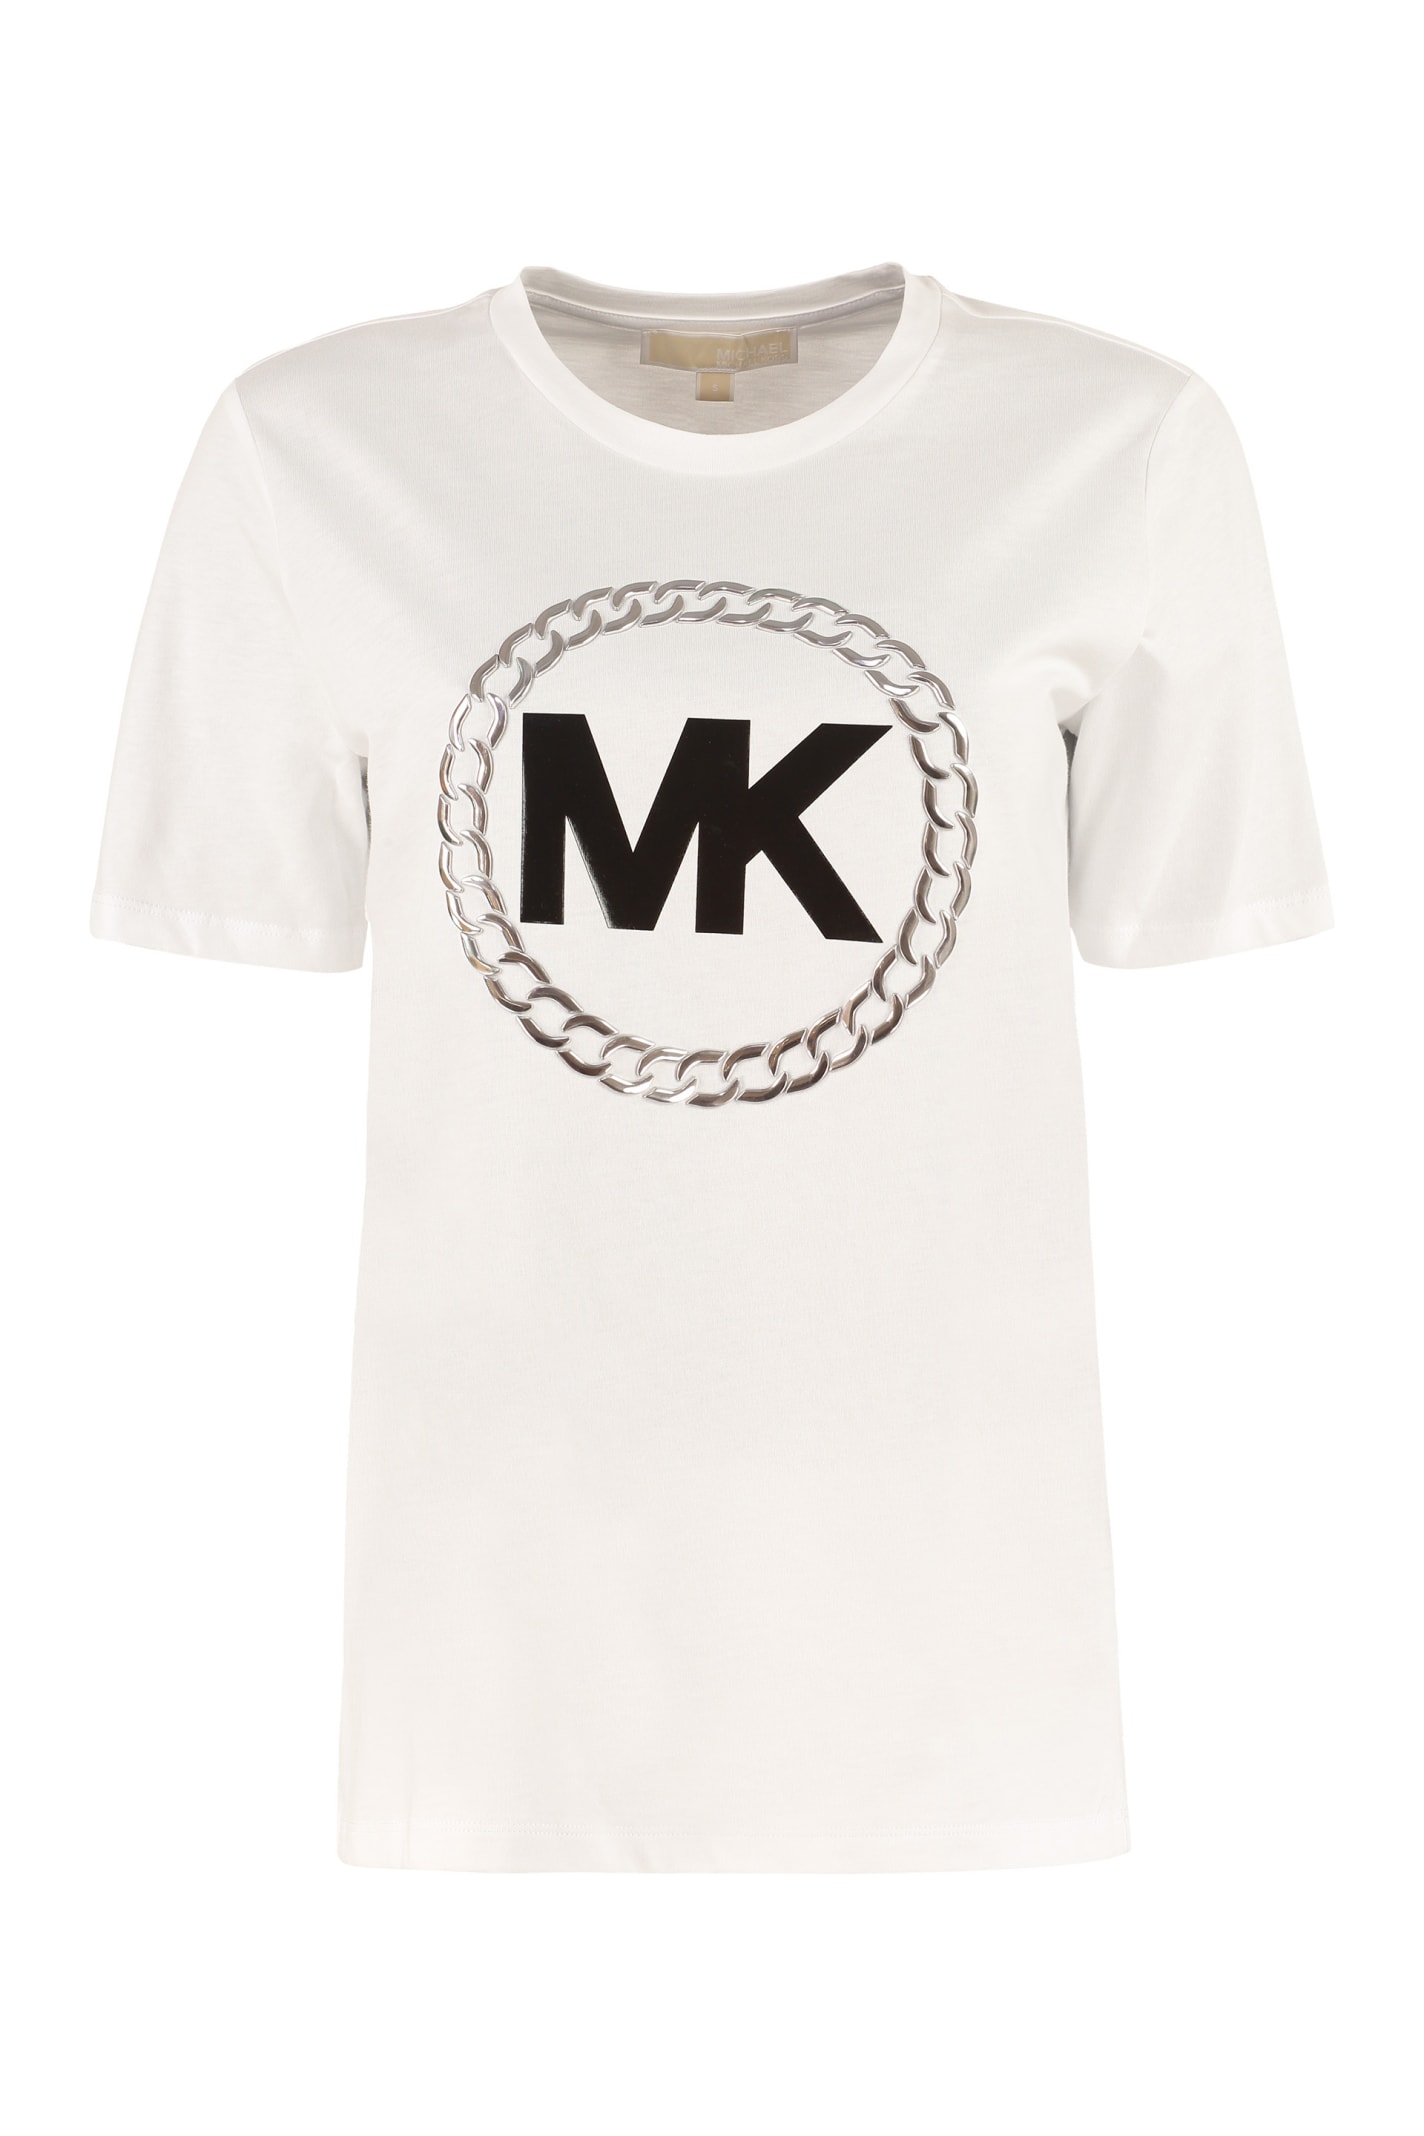 Michael Kors Logo Print Cotton T-shirt